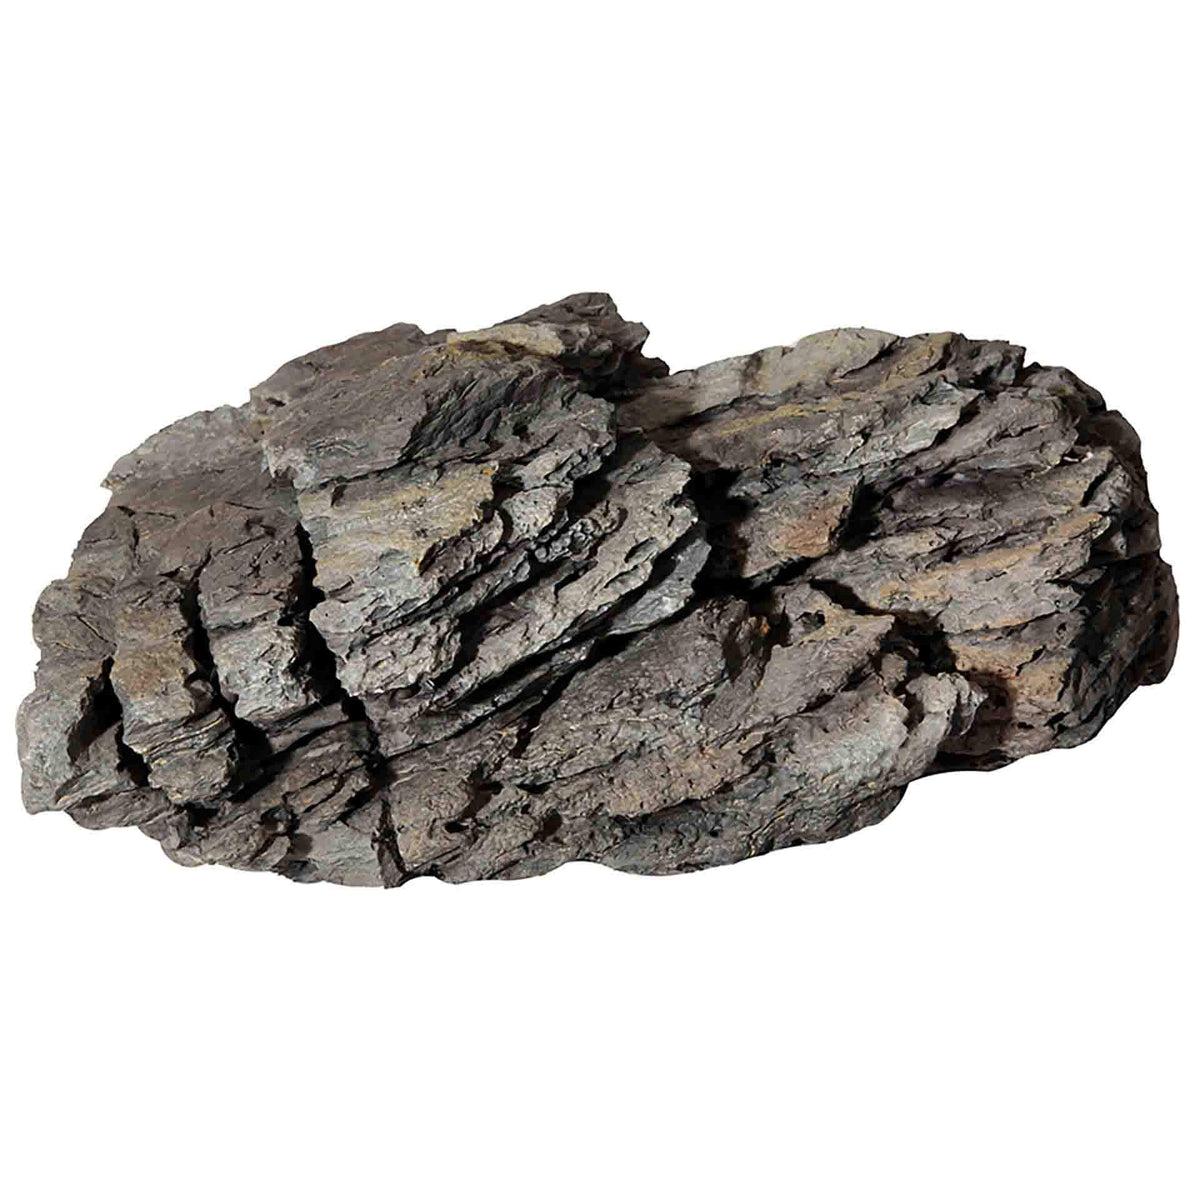 Aqua One Basalt Rock Large 21.5 x 13.3 x 8.5cm - Rock Ornament